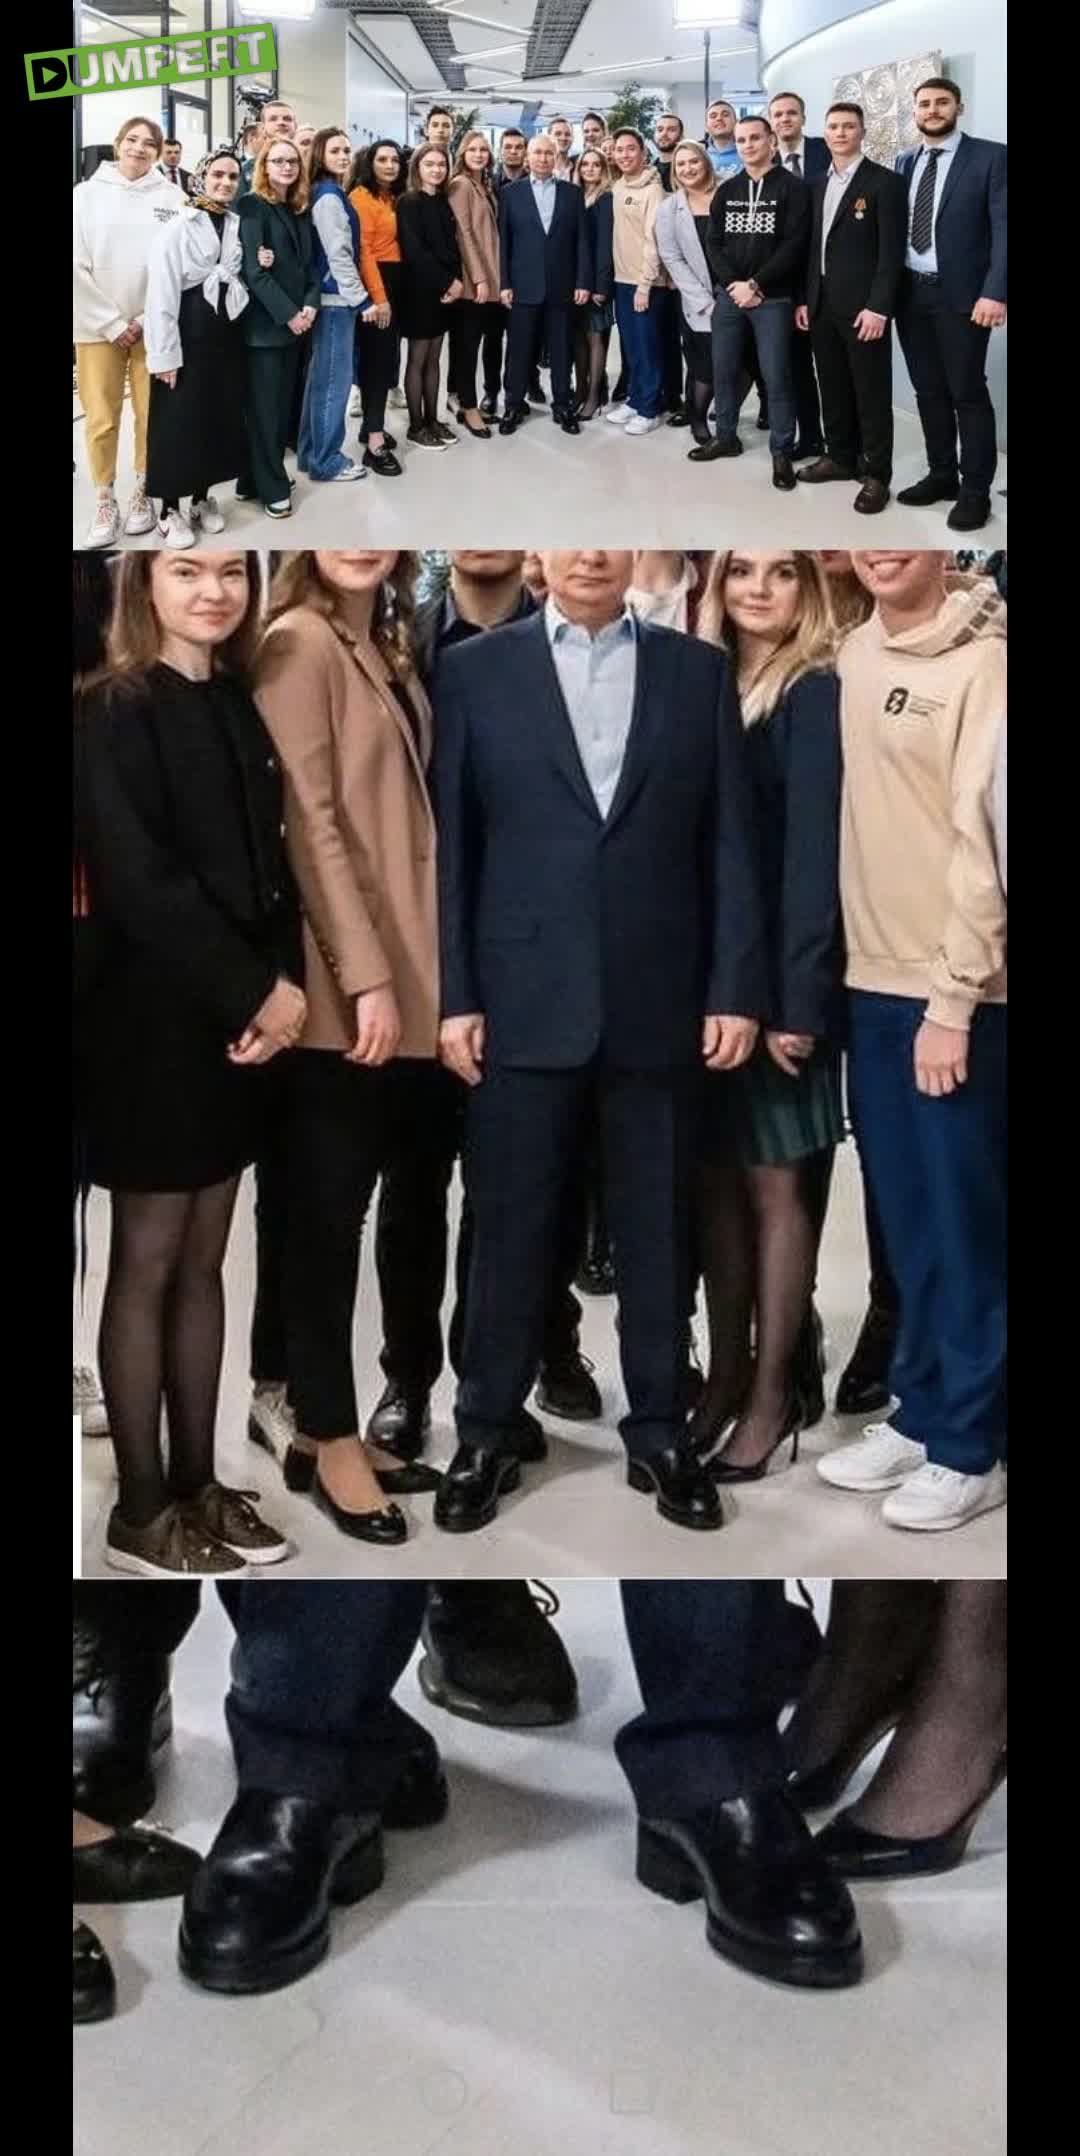 Putin, de "grote" man. 